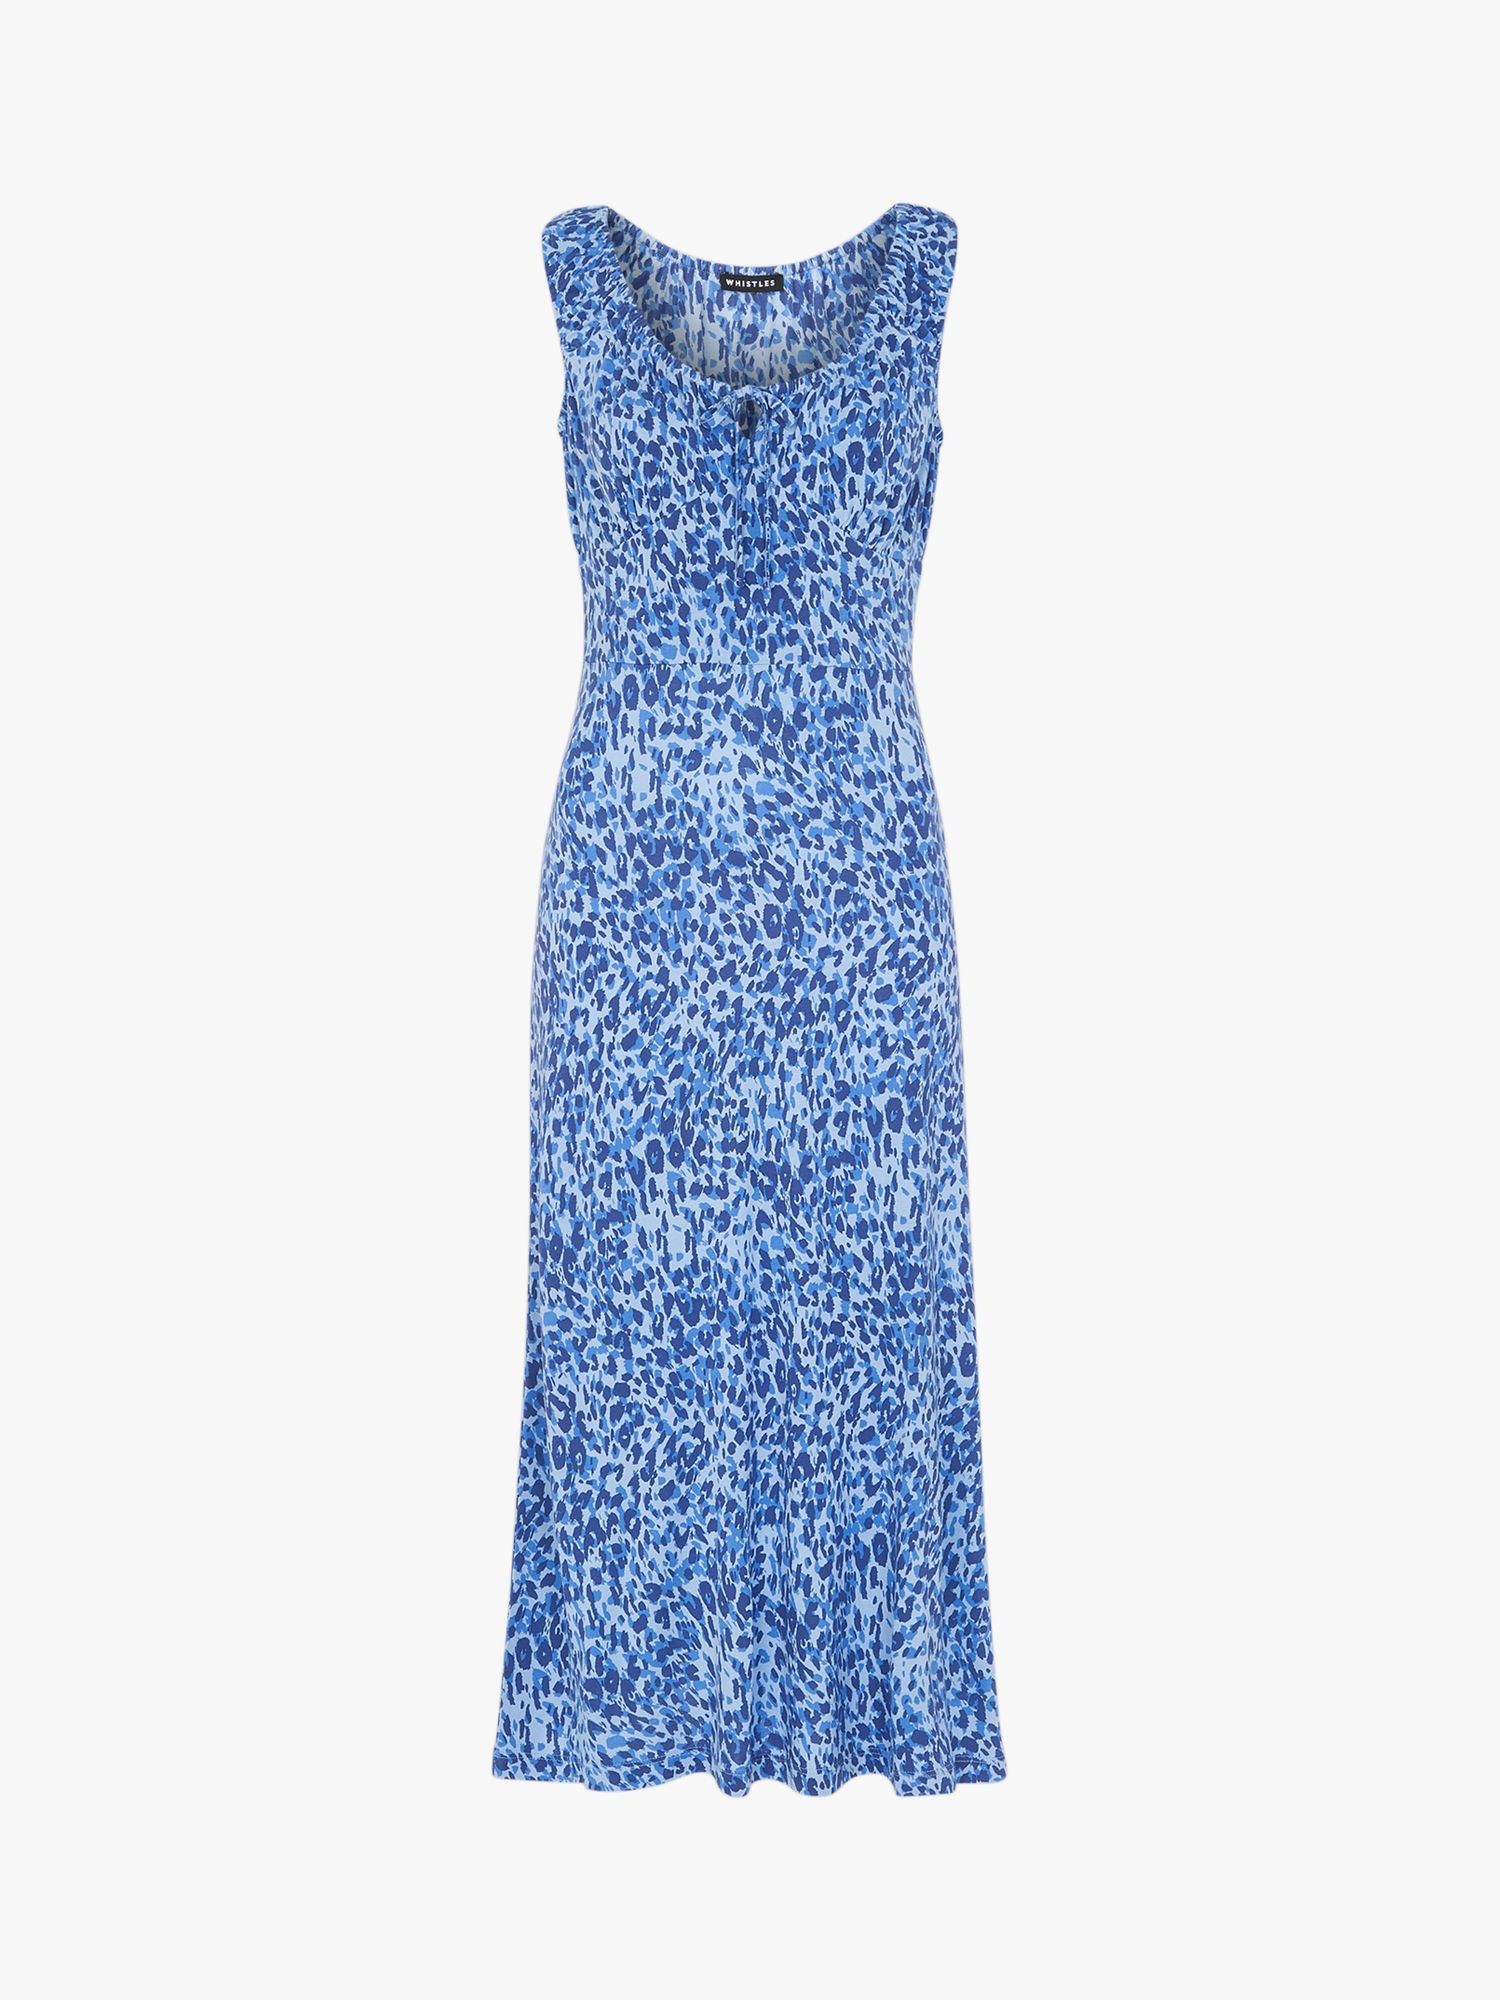 Buy Whistles Summer Cheetah Jersey Dress, Blue/Multi Online at johnlewis.com